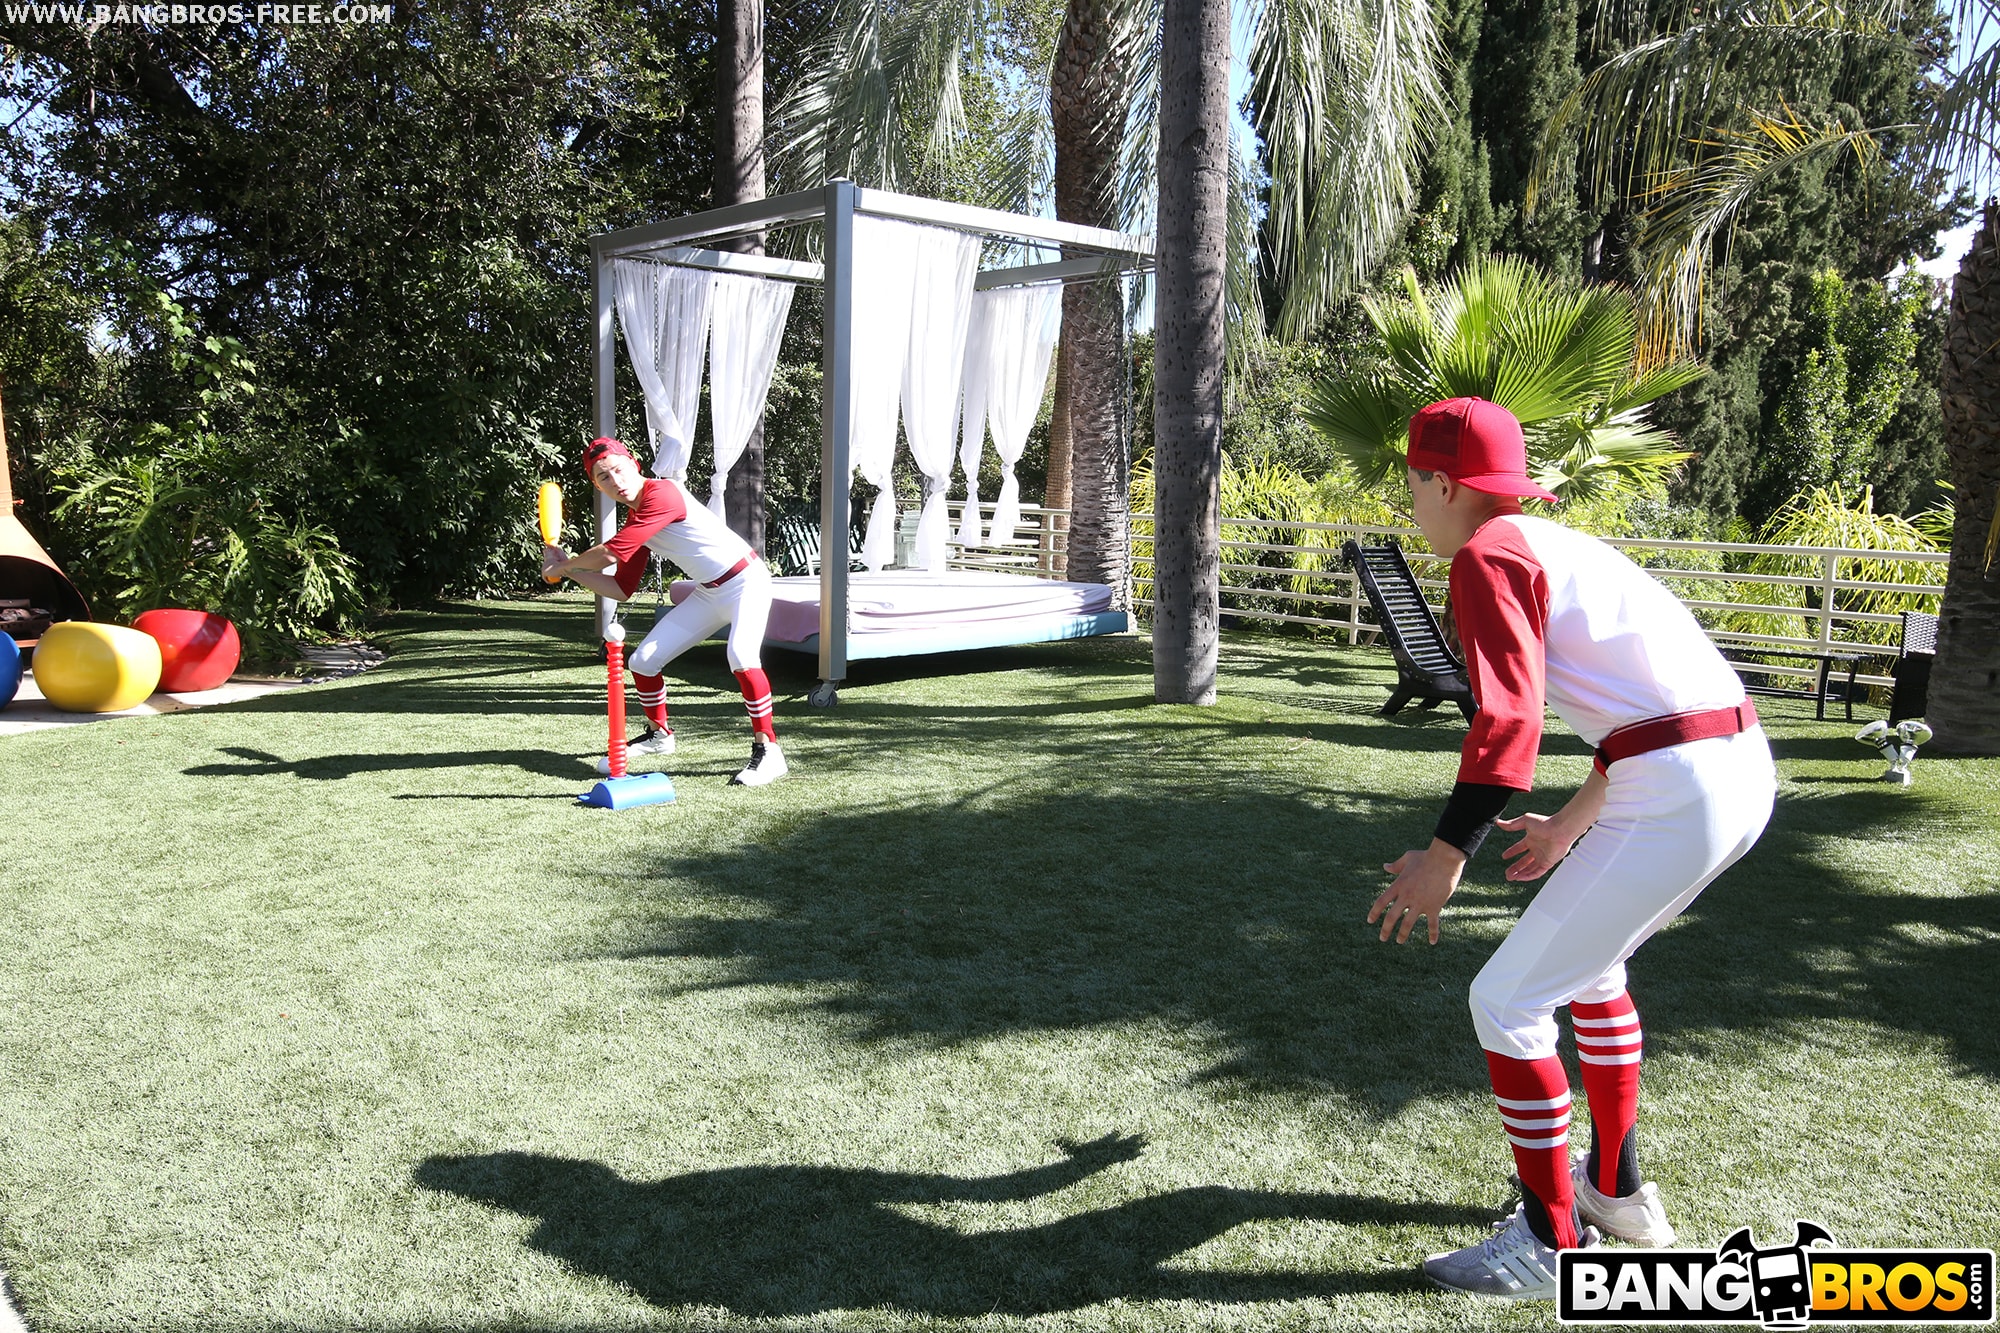 Bangbros 'Baseball Practice Turns Into A Wild Threesome' starring Dee Williams (Photo 17)